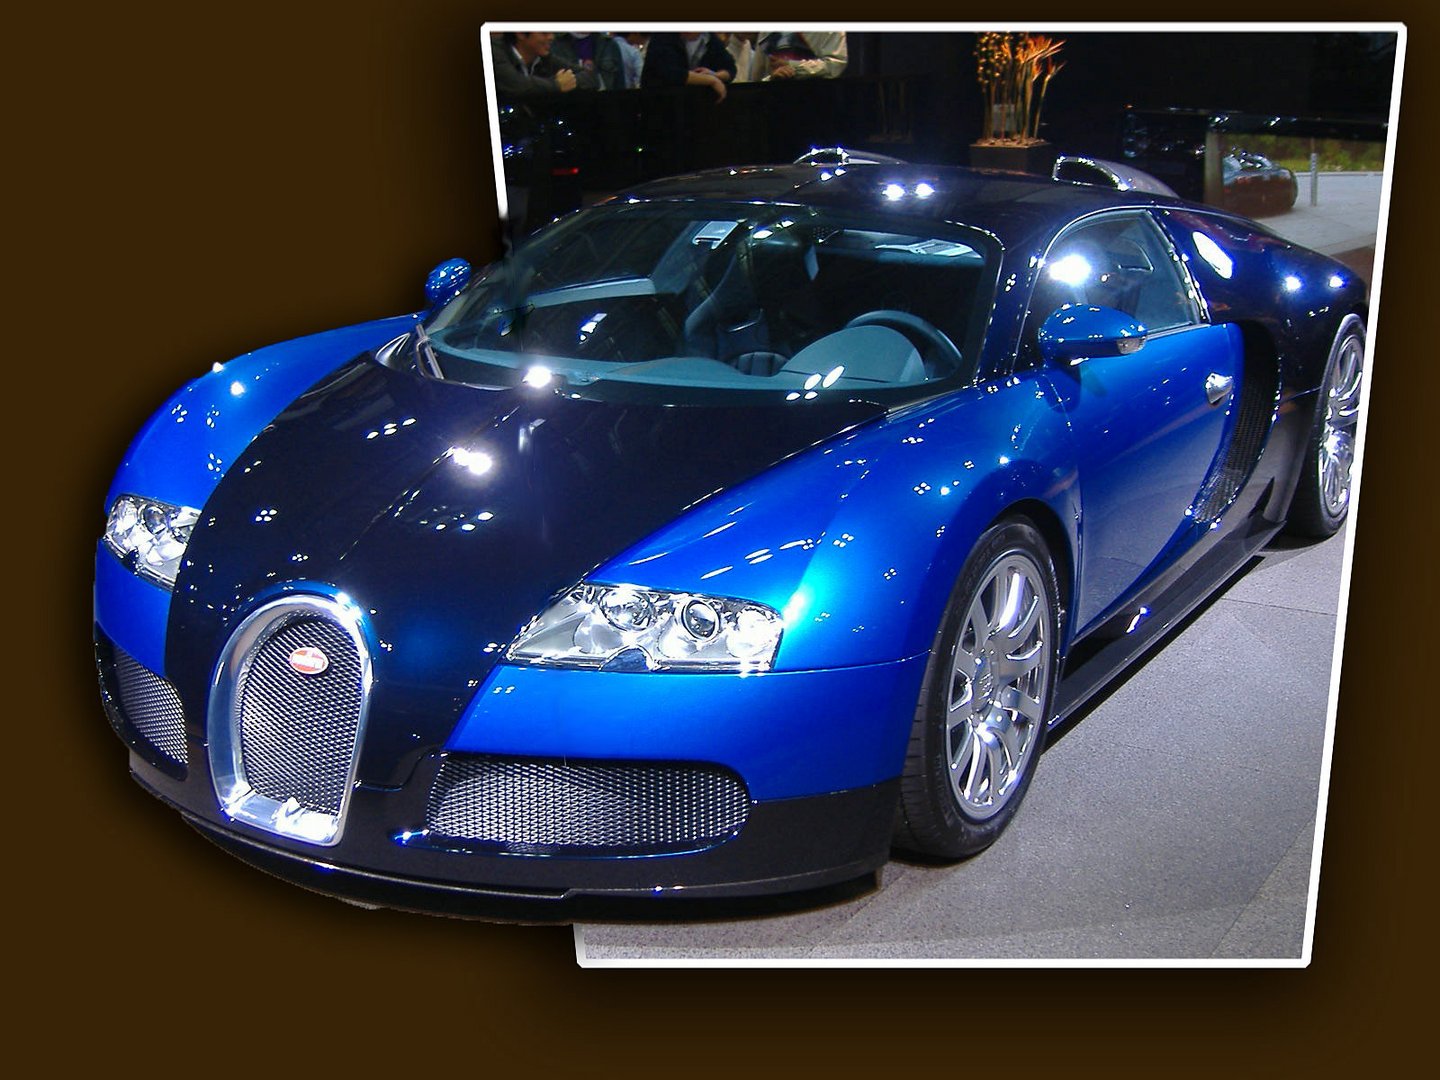 Bugatti~out of bounds